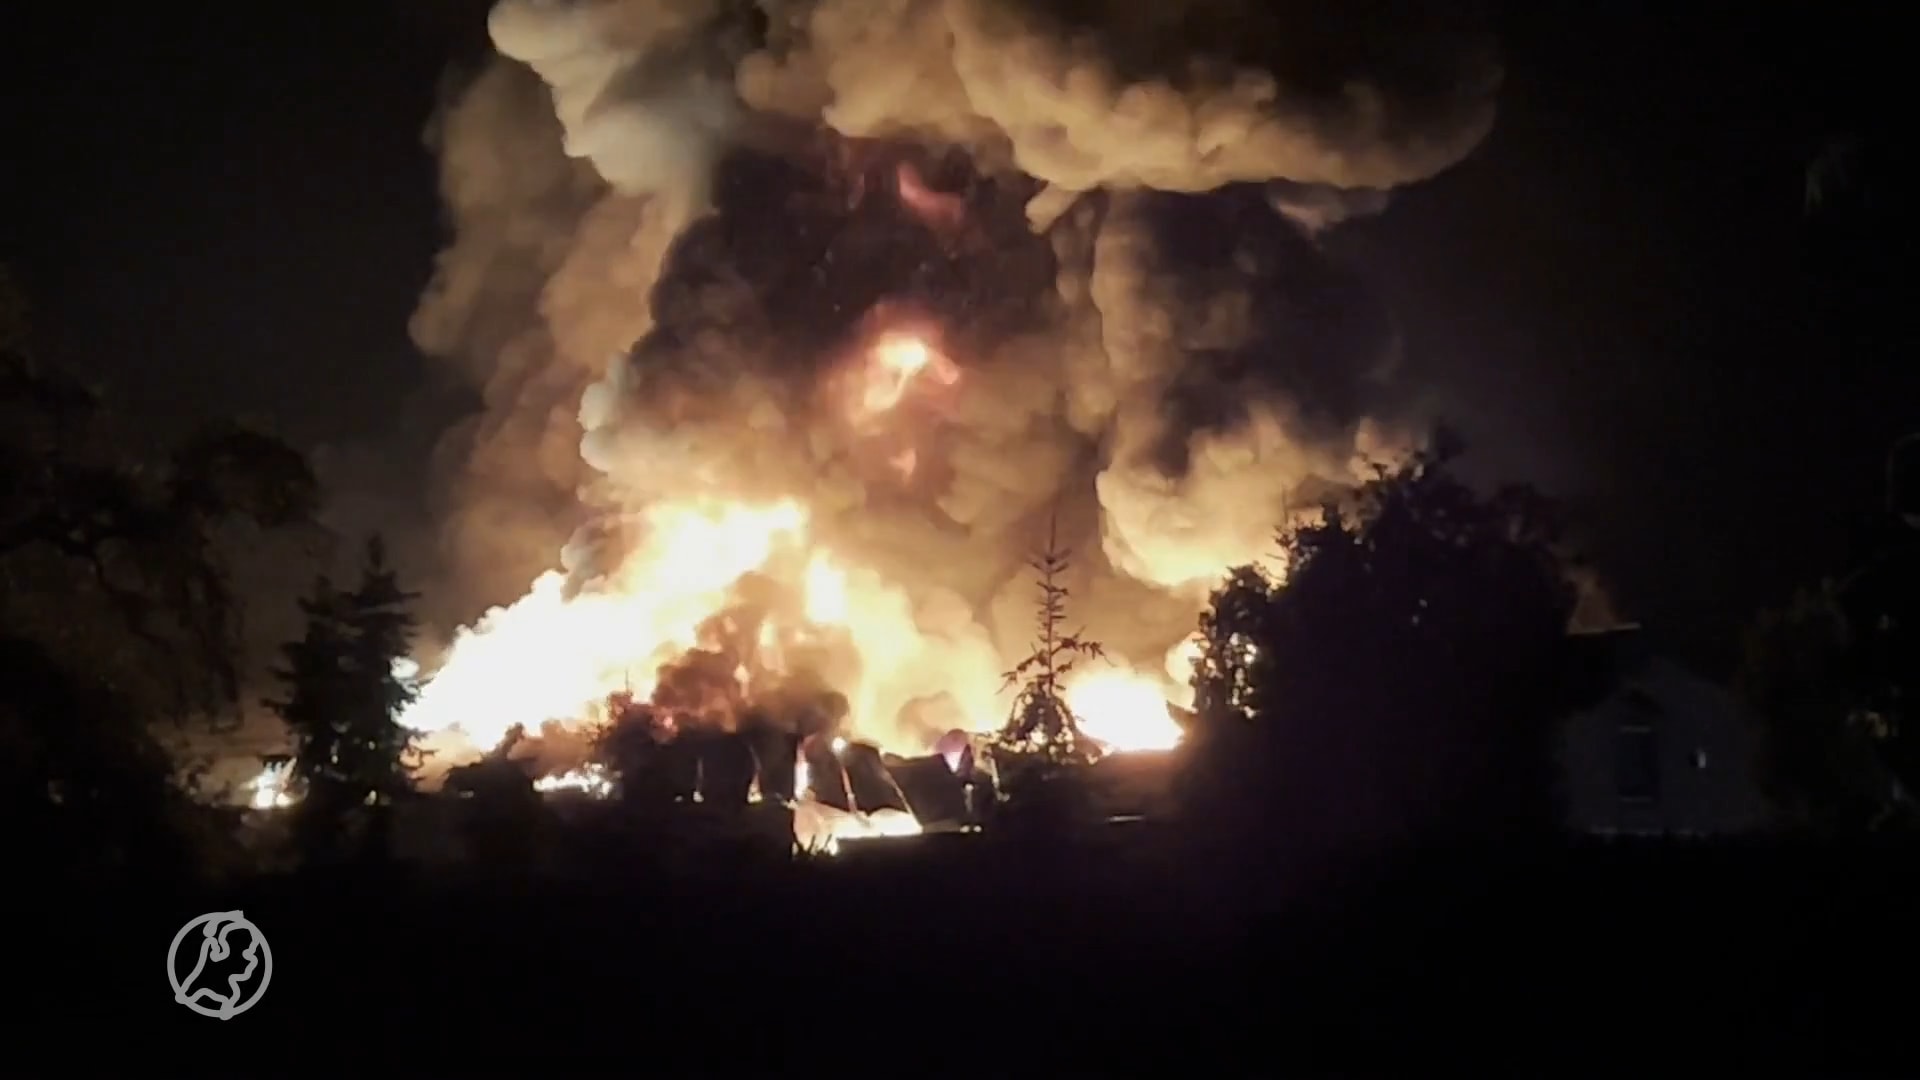 Grote brand verwoest opslagloods met persoonlijke storage units in Didam